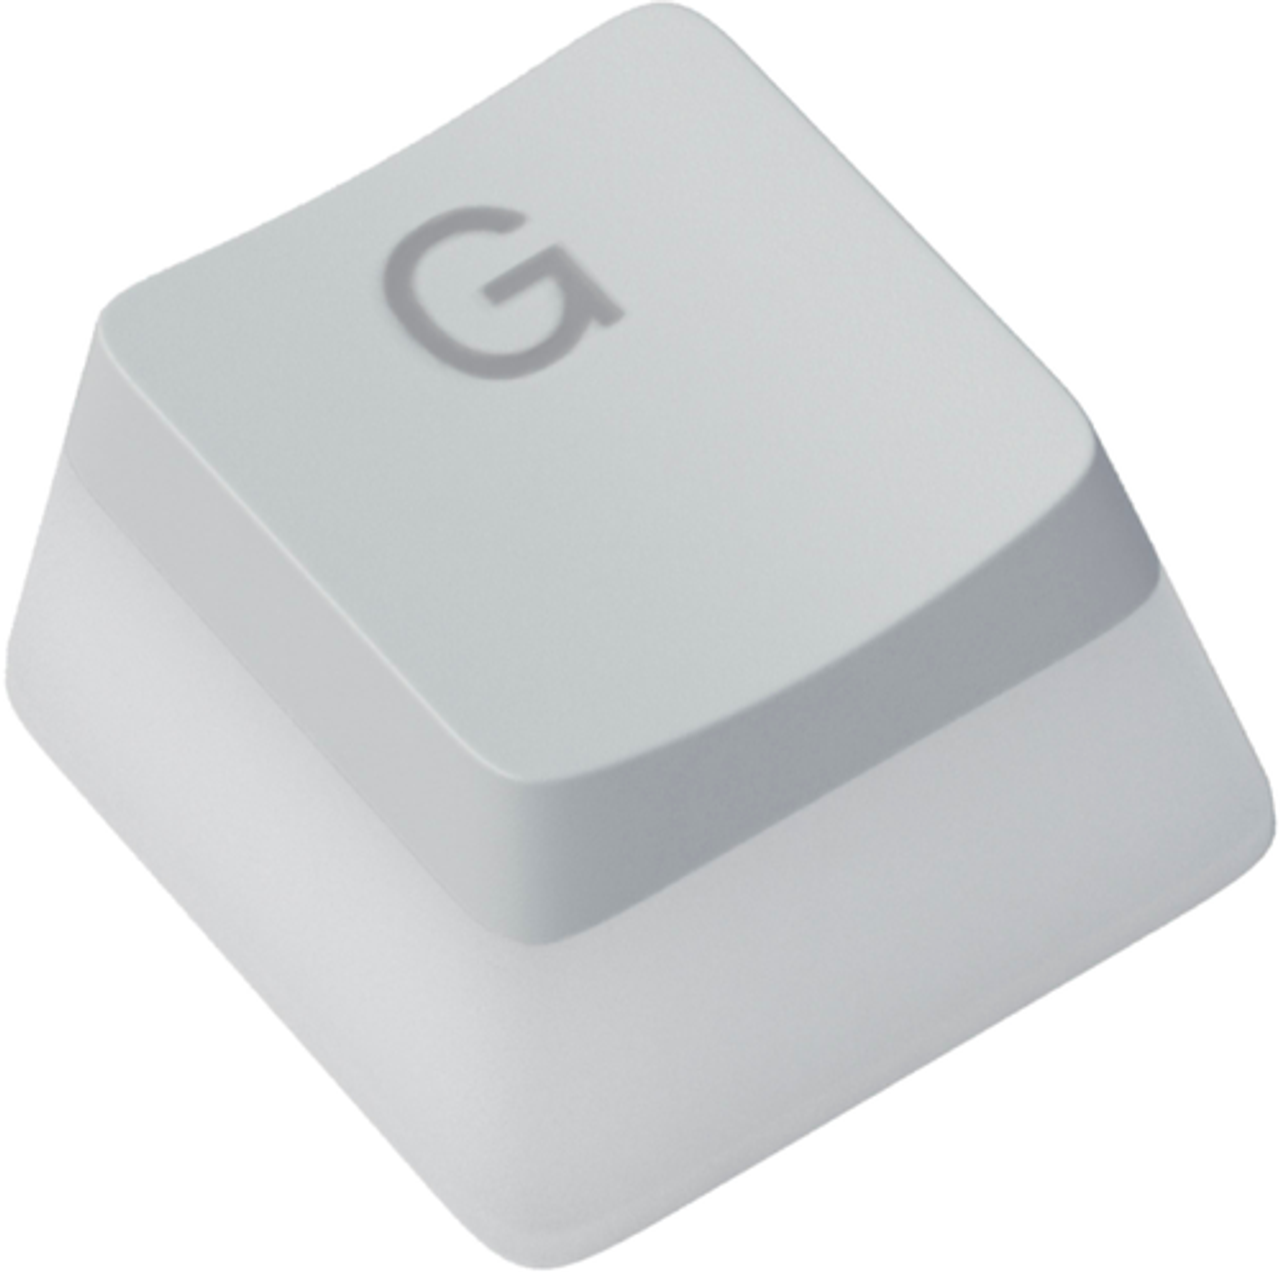 Glorious - GPBT Aura V2 Keycaps - White